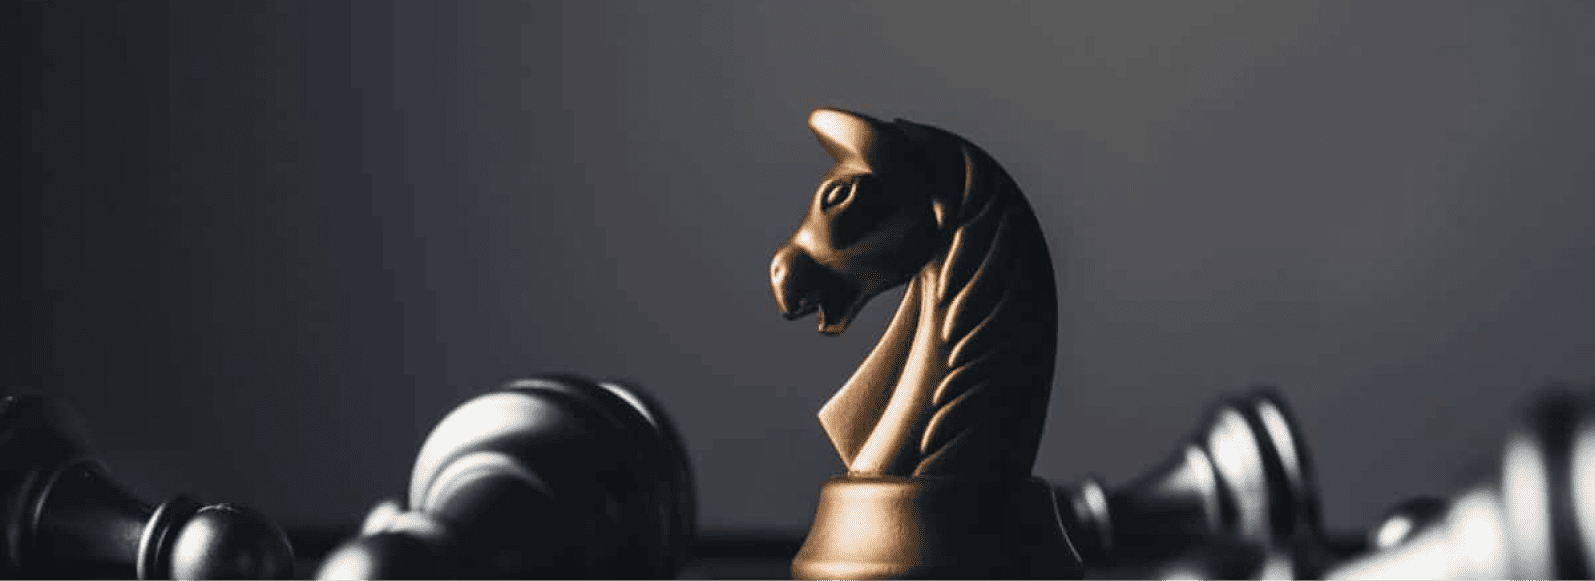 chess-horse-image